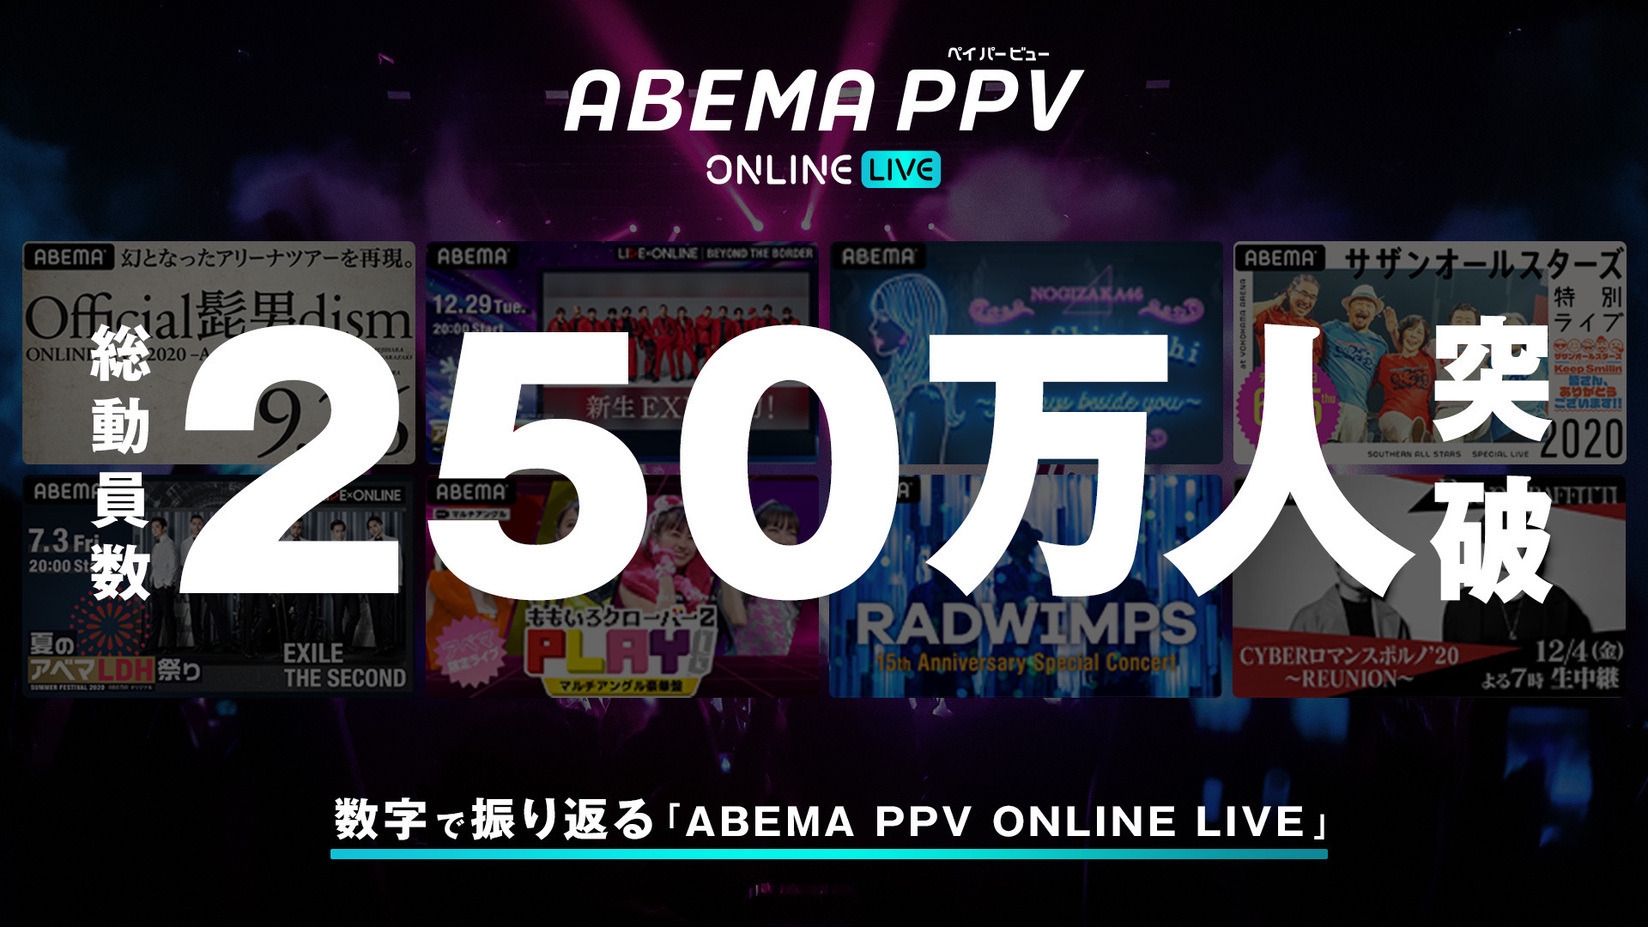 Abema Ppv Online Live 開始から約半年で総動員数250万人を突破 出演アーティスト数は国内最大級の500人超えに 株式会社abematv